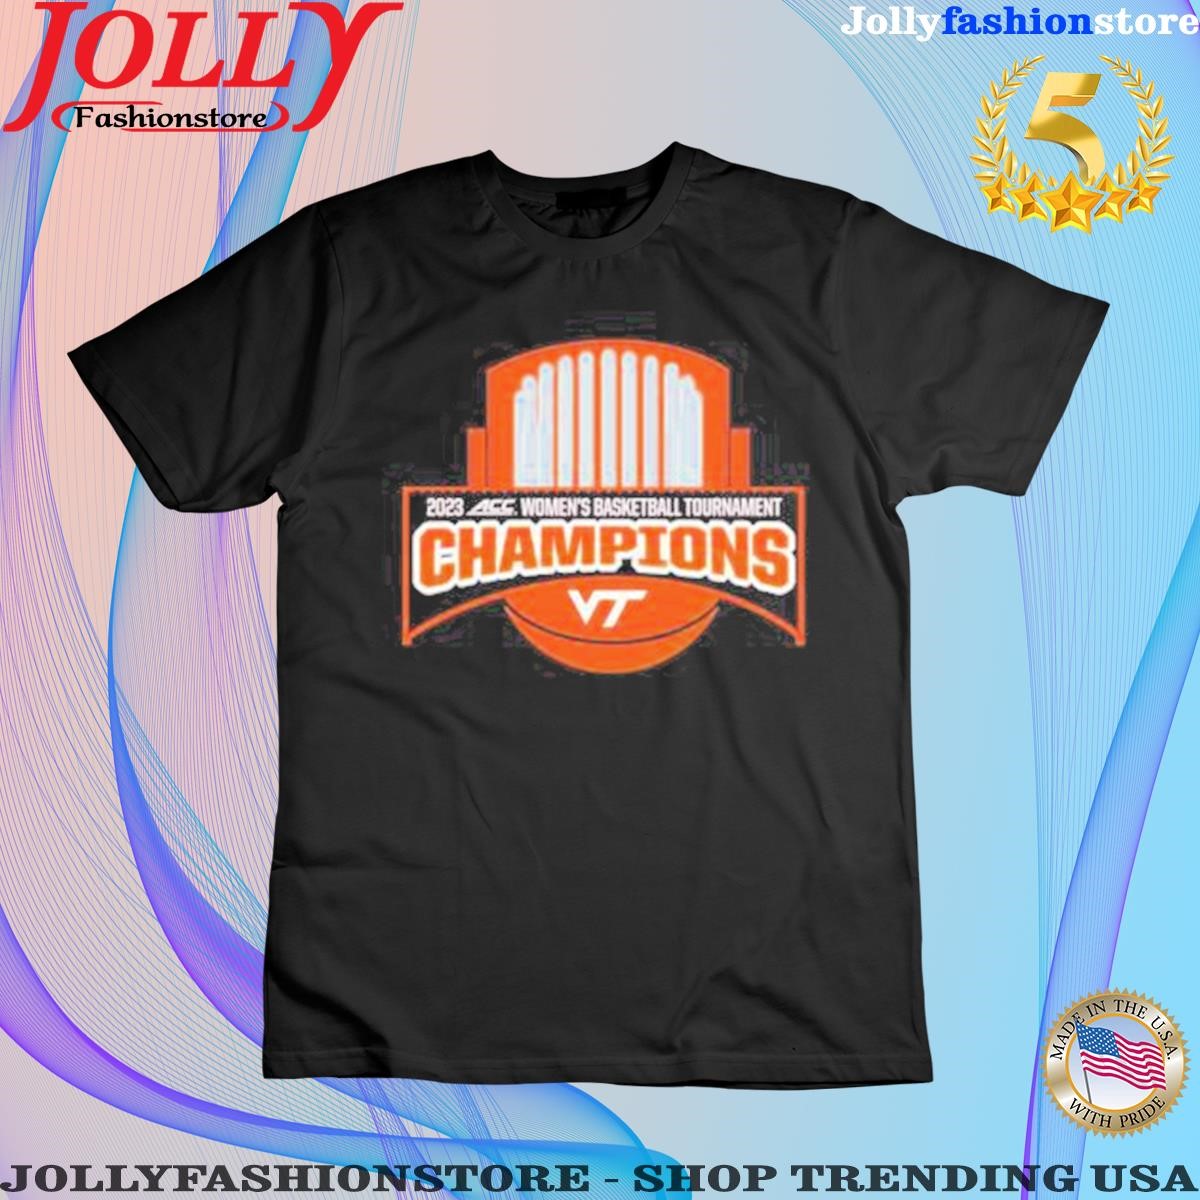 Official 2023 Acc Women’S Basketball Tournament Champions Virginia Tech Hokies shirt women tee shirt.png